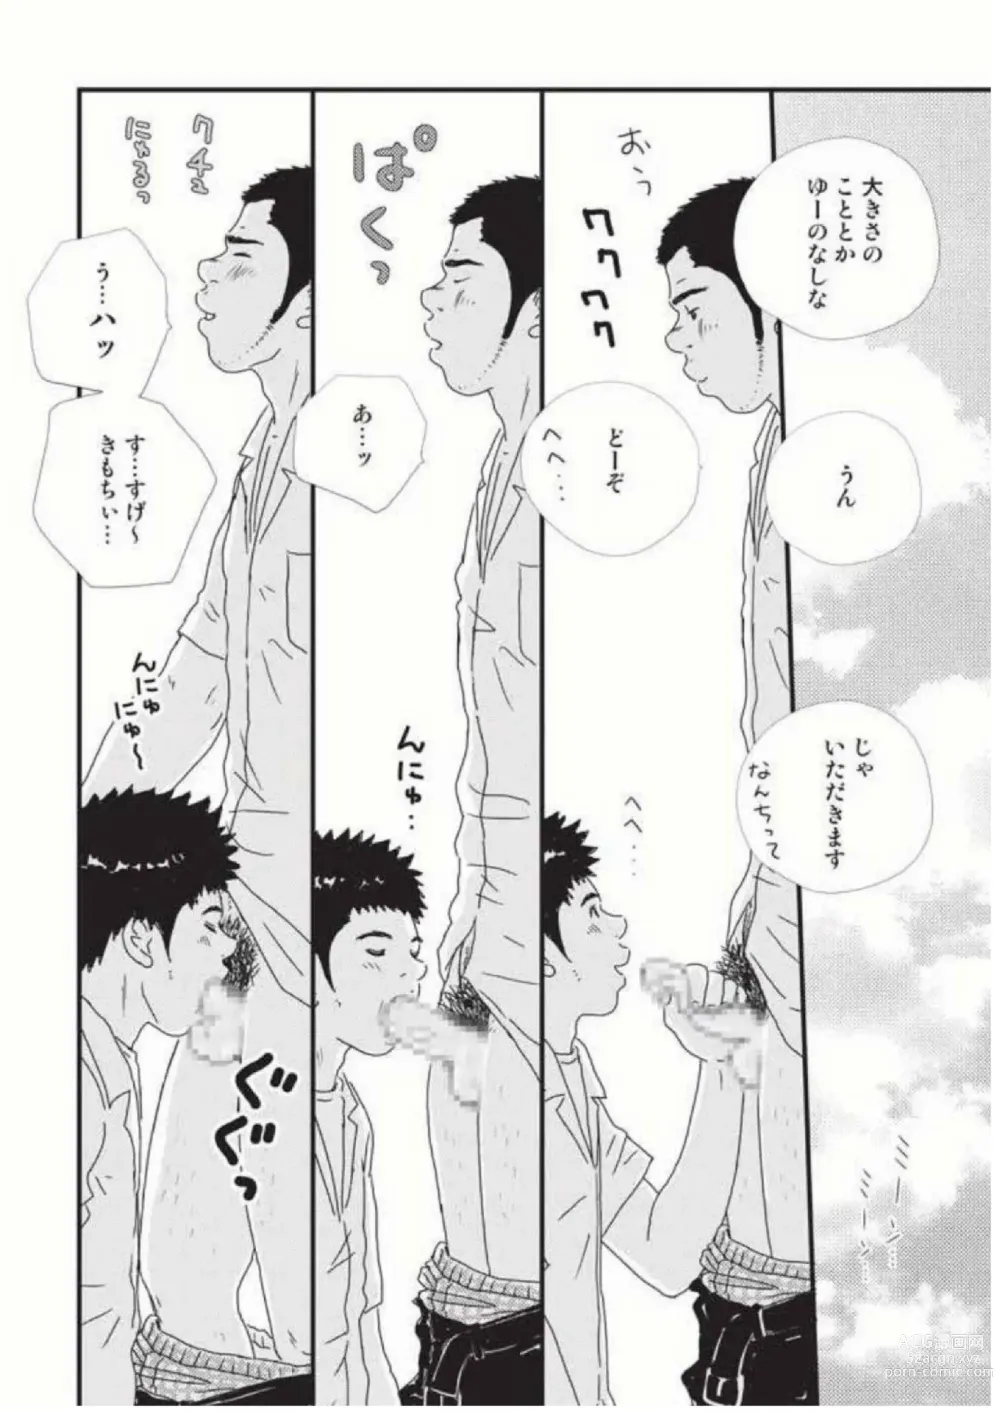 Page 6 of manga SUCK!